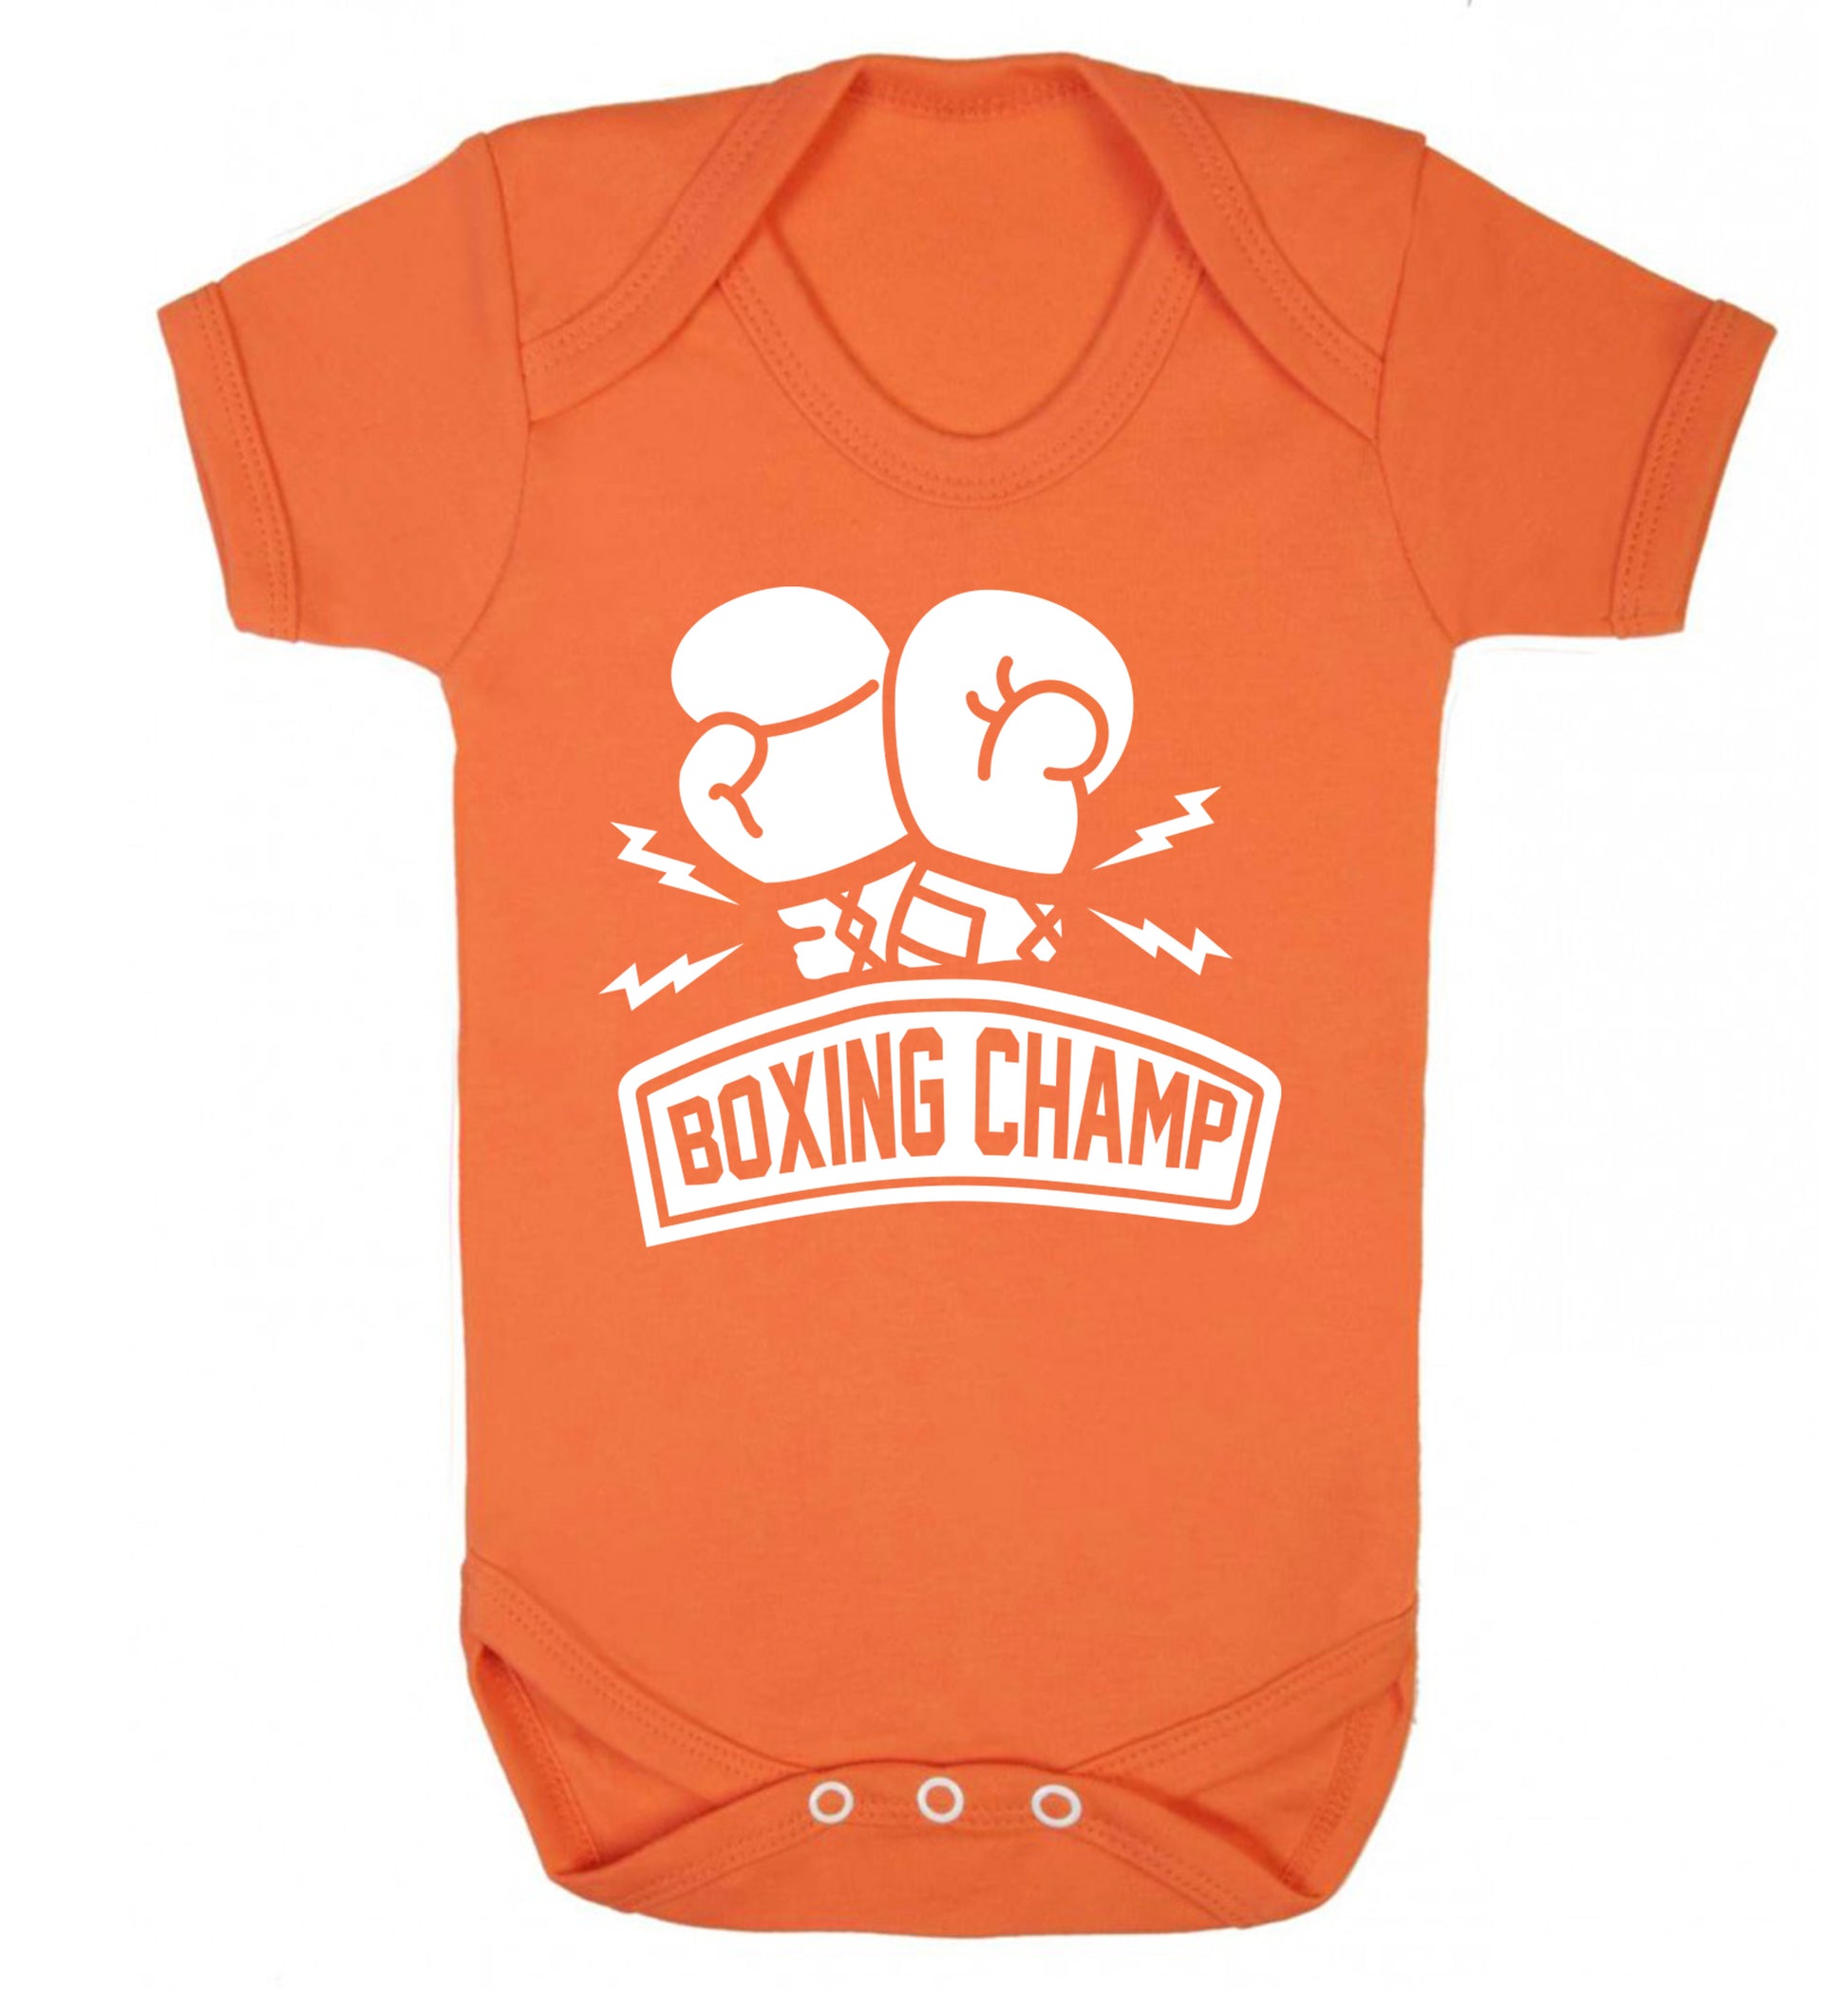 Boxing Champ Baby Vest orange 18-24 months